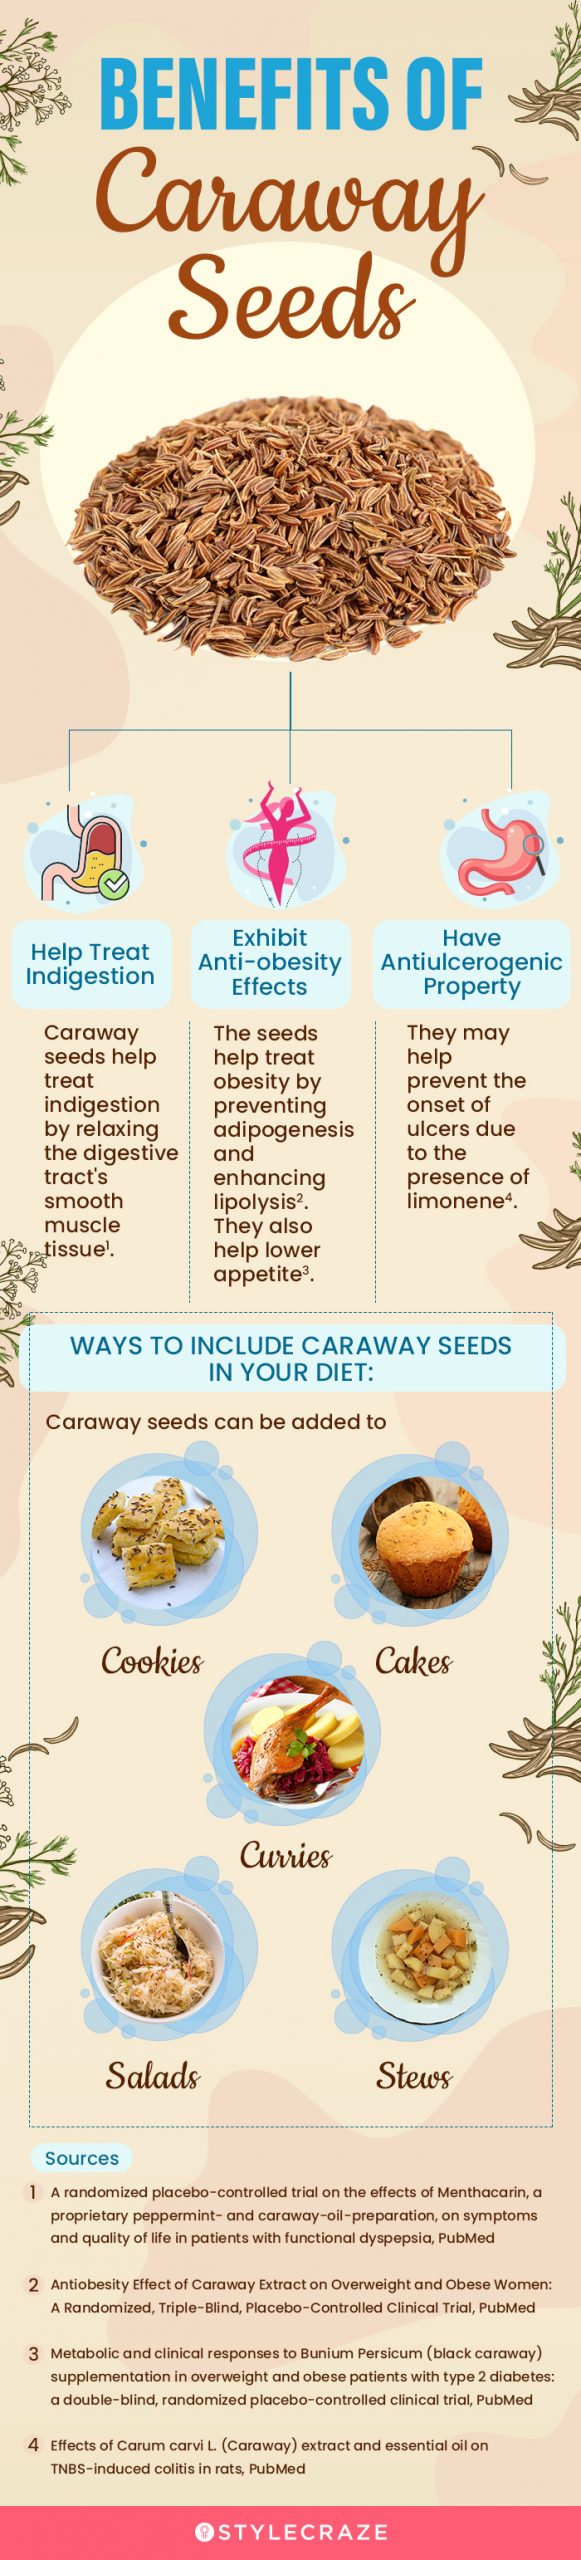 benefits of caraway seeds (infographic)